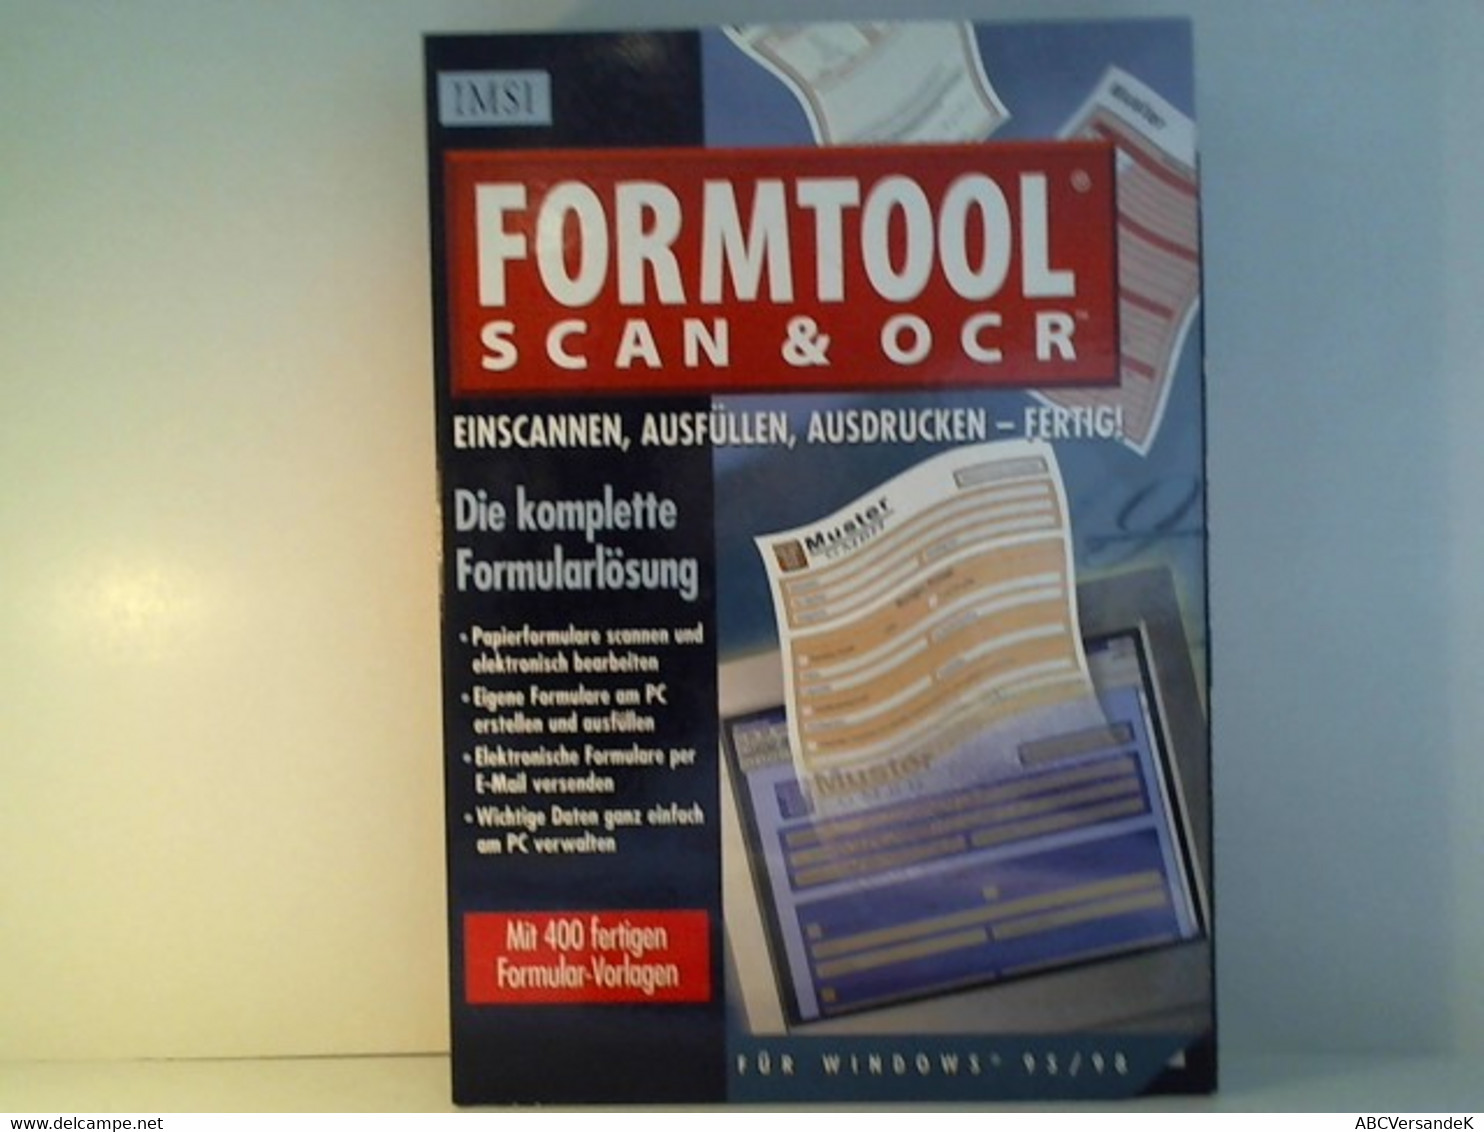 FormTool Scan & OCR - Técnico